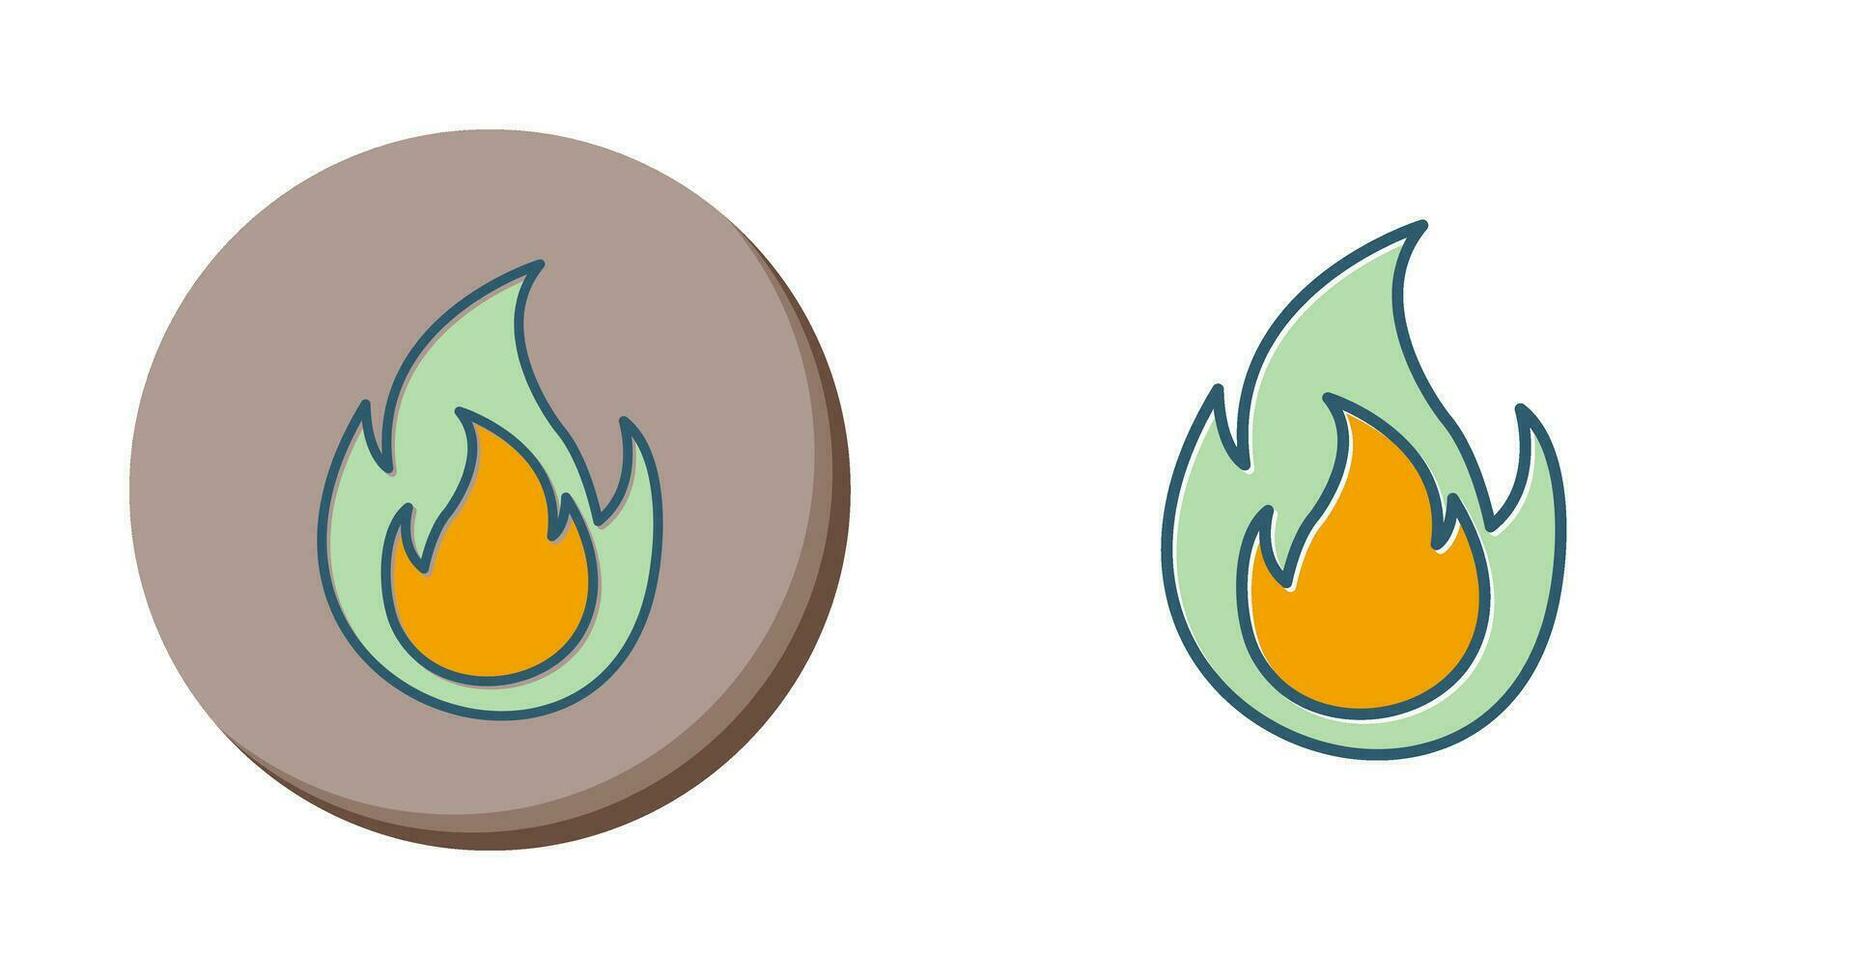 Flame Vector Icon